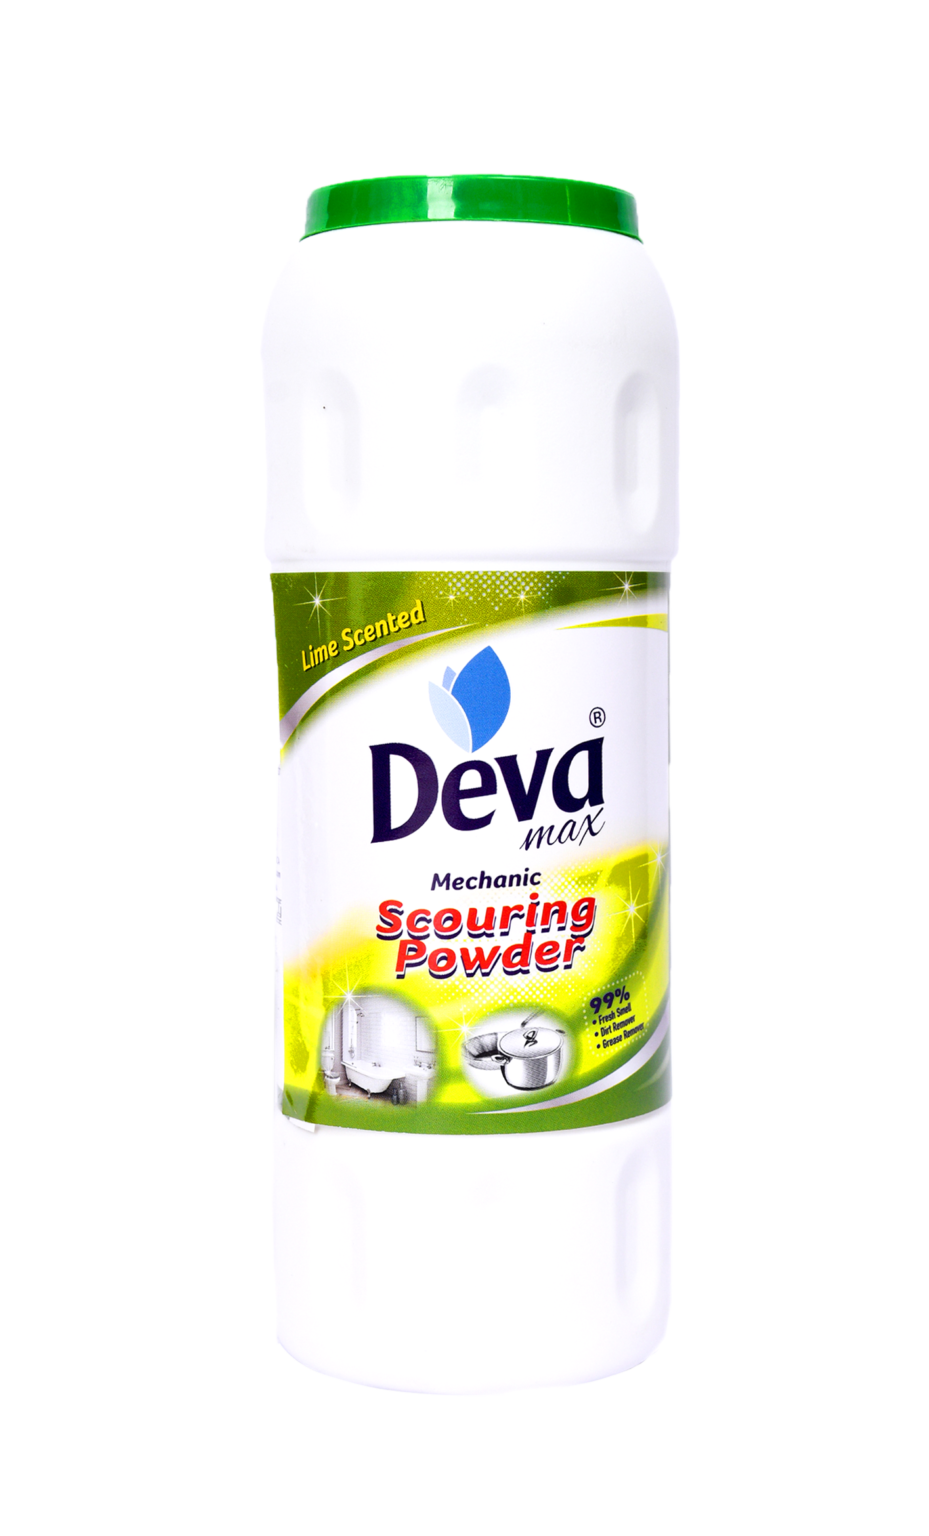 500 gram pack of deva scouring powder lime scented